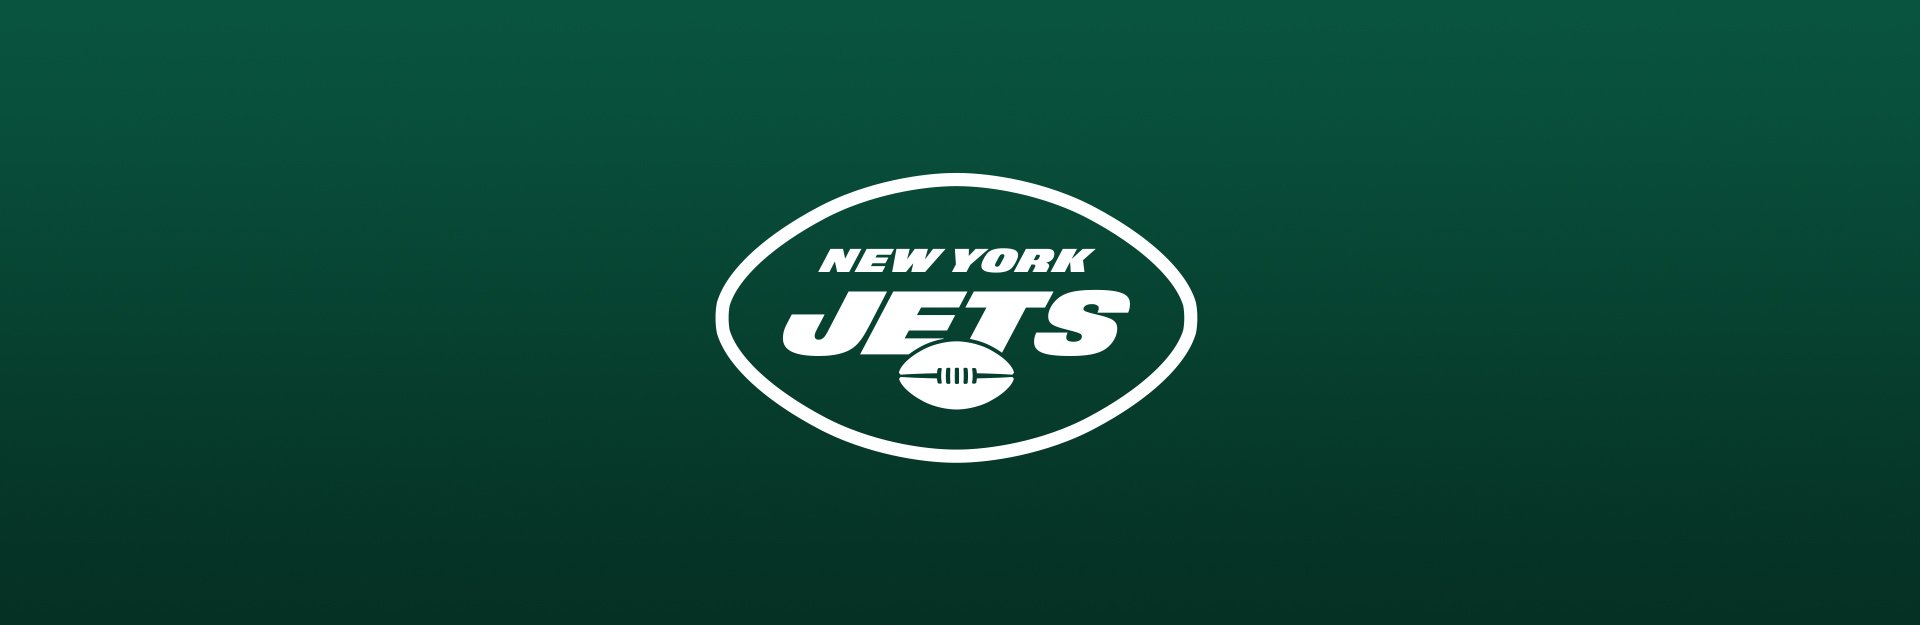 New York Jets logo on green background